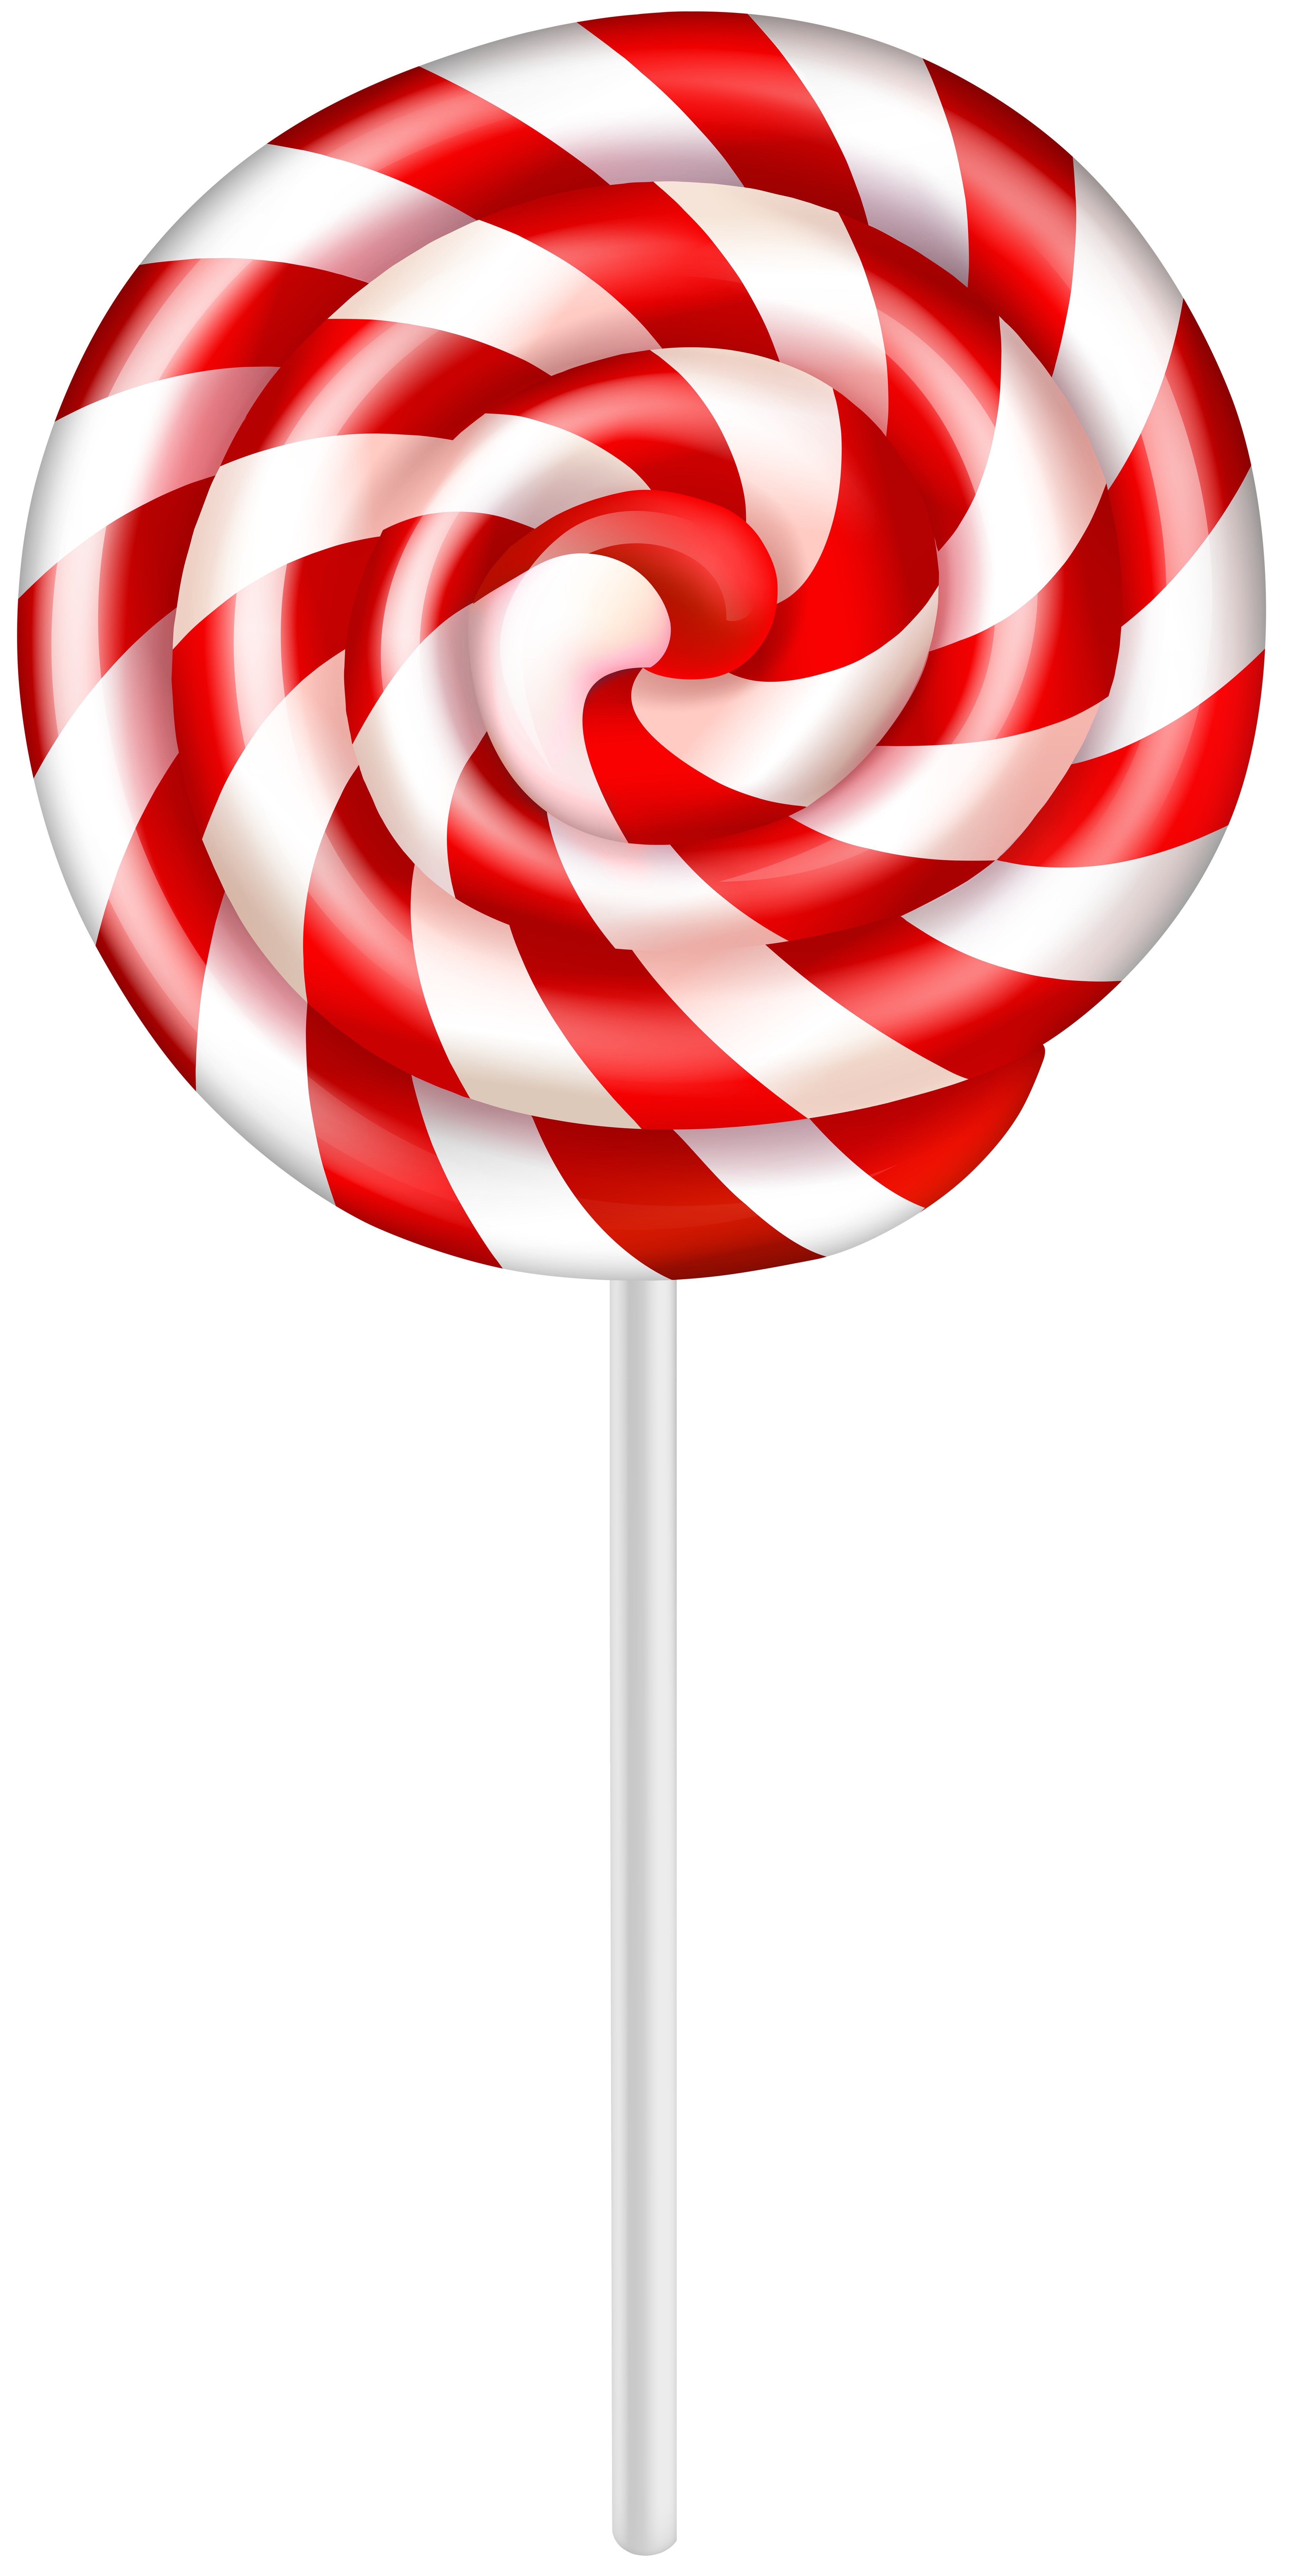 Red Lollipop Clip Art Image.